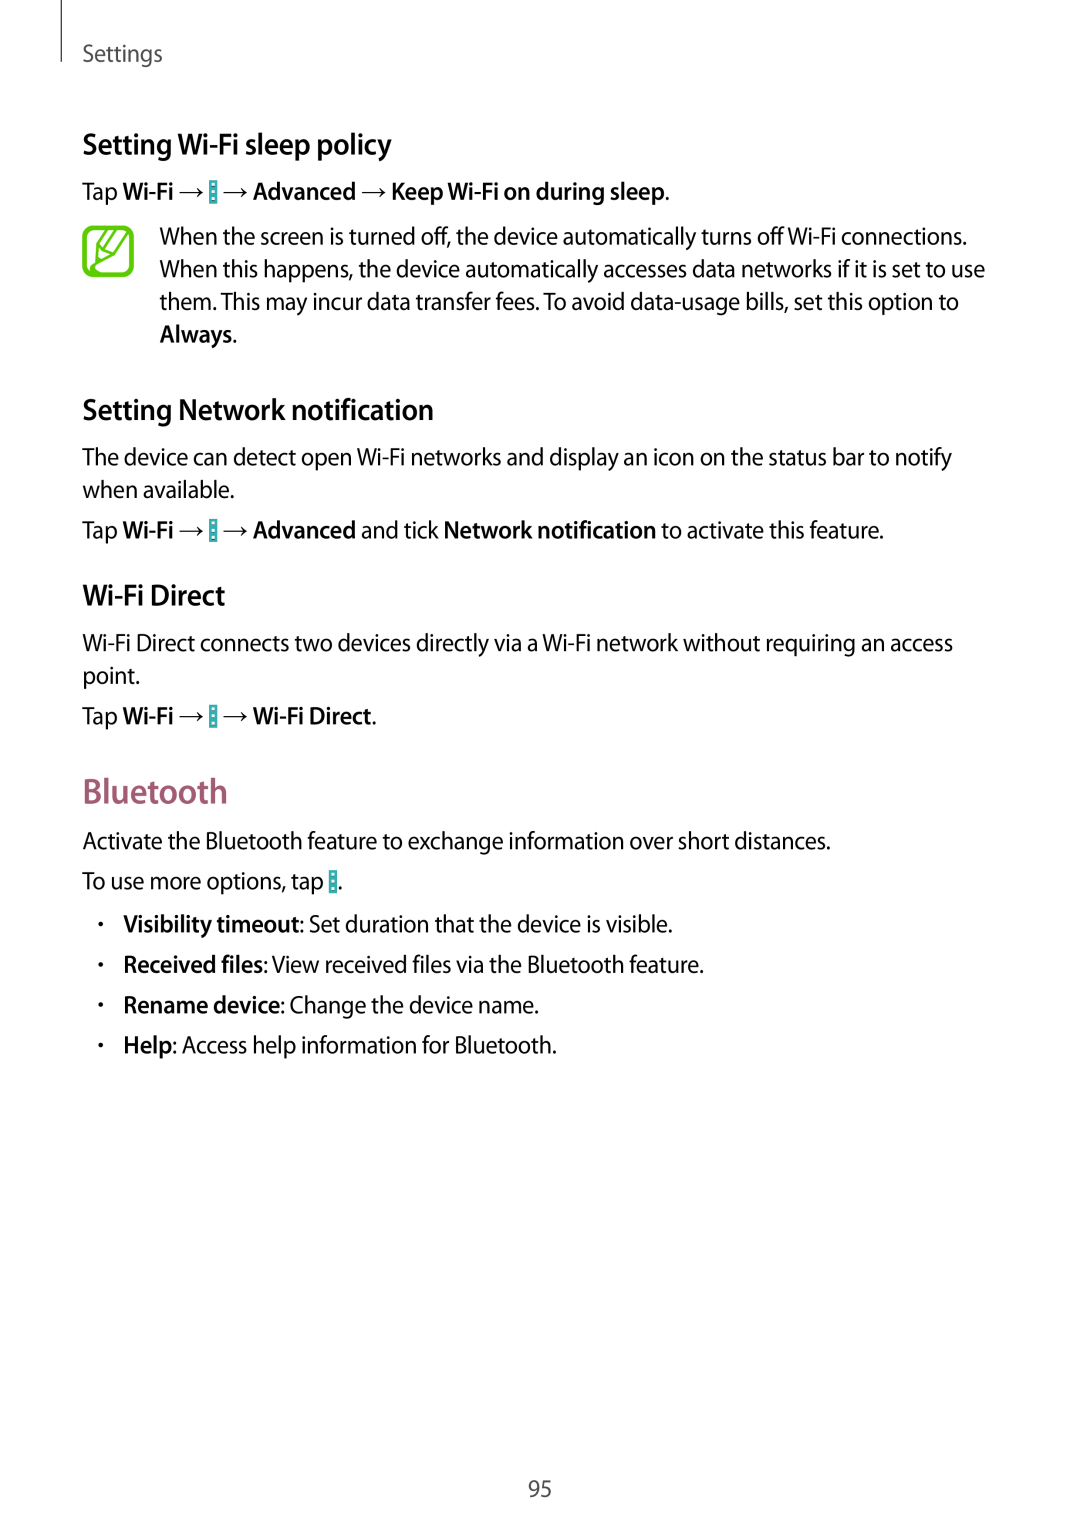 Samsung GT-I9195DKIORX manual Bluetooth, Setting Wi-Fi sleep policy, Setting Network notification, Wi-Fi Direct, Settings 